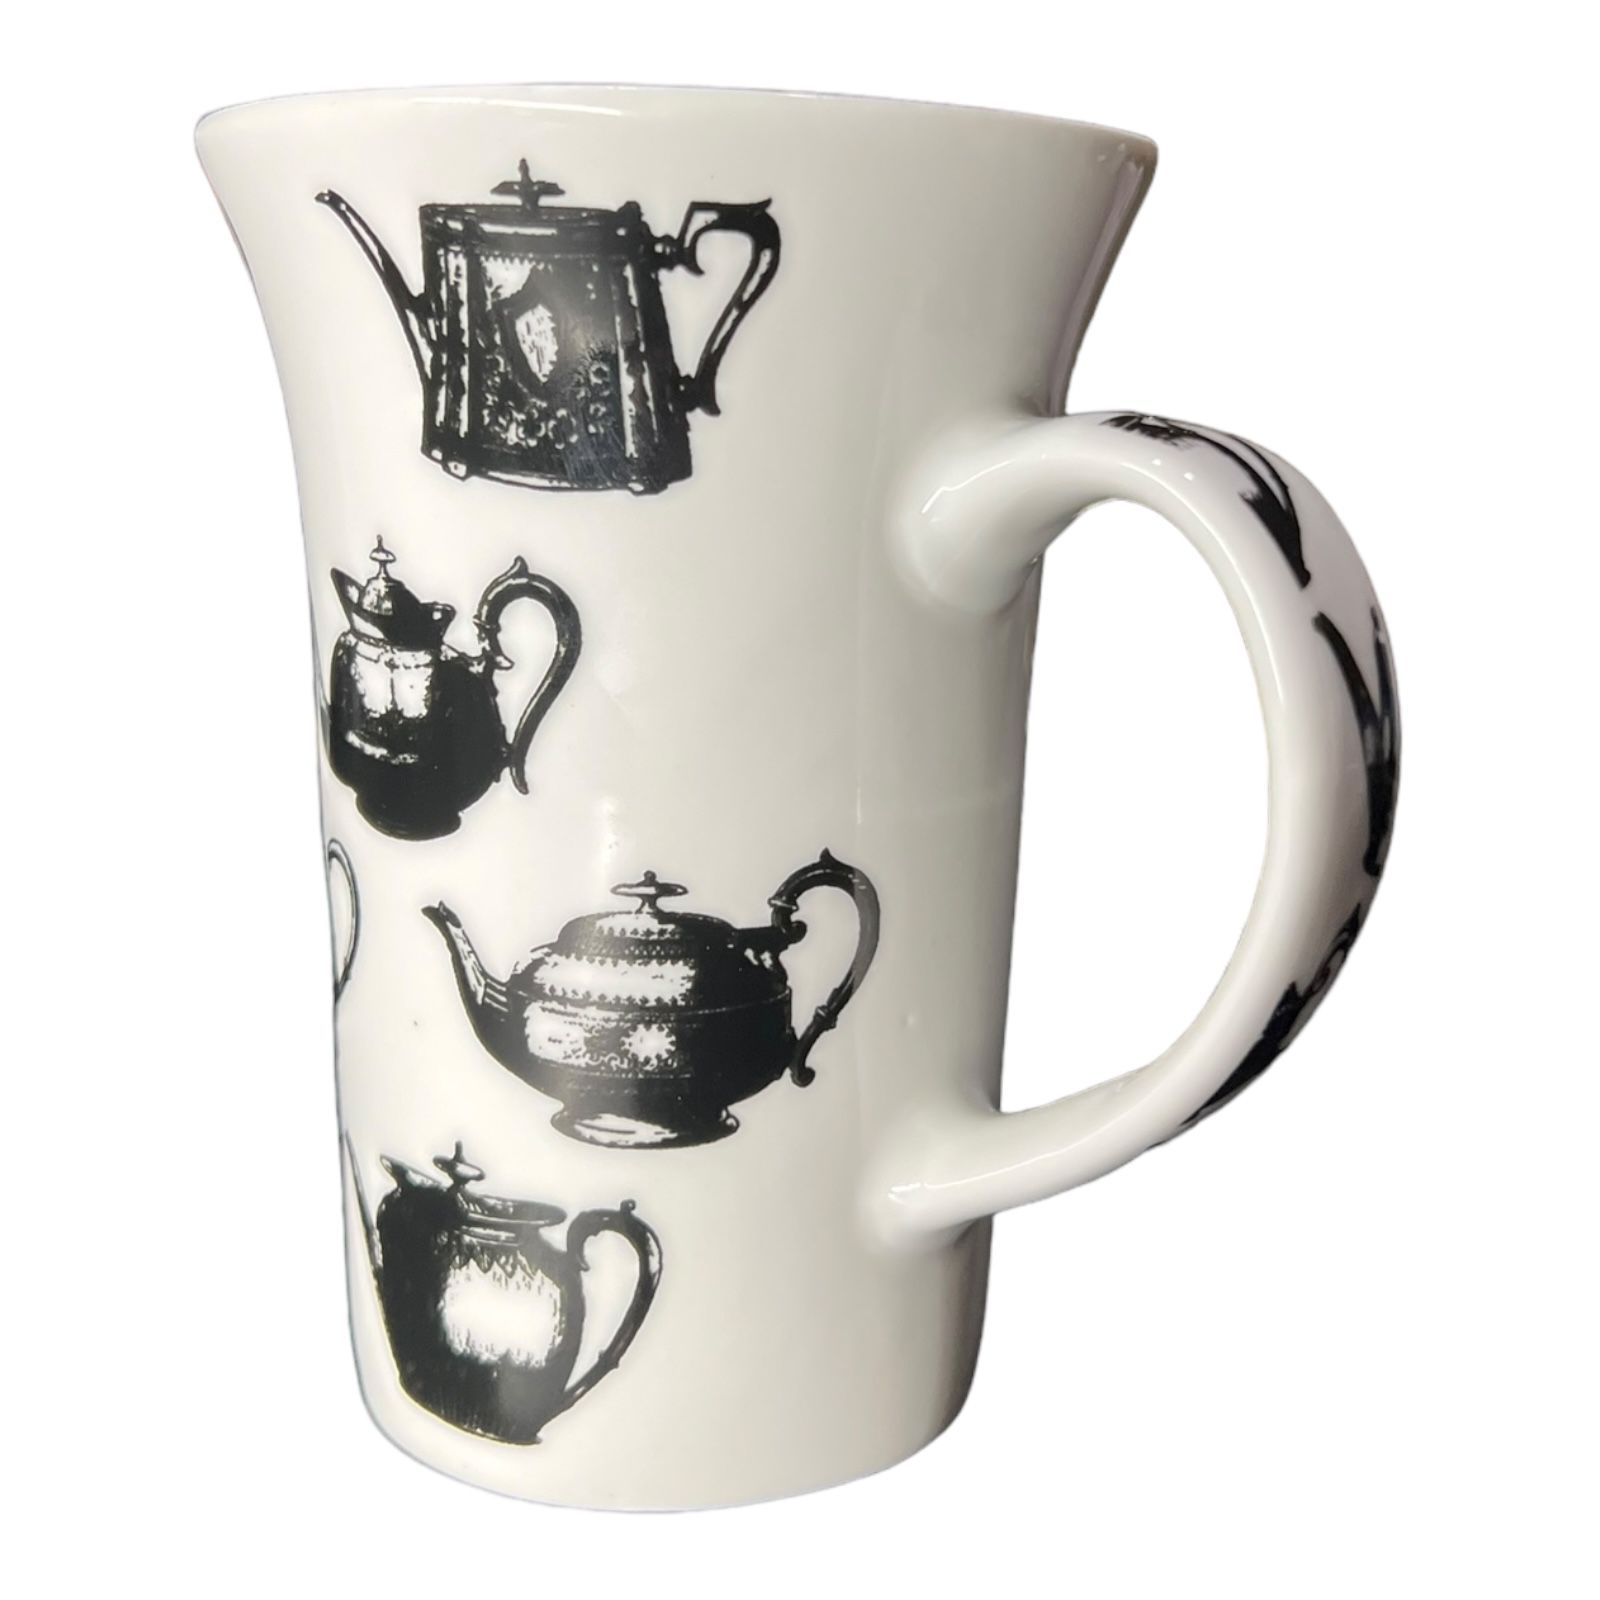 Coffee Mug Cup Paul Cardew "Antique Pewter" Vintage Teapots England 2008